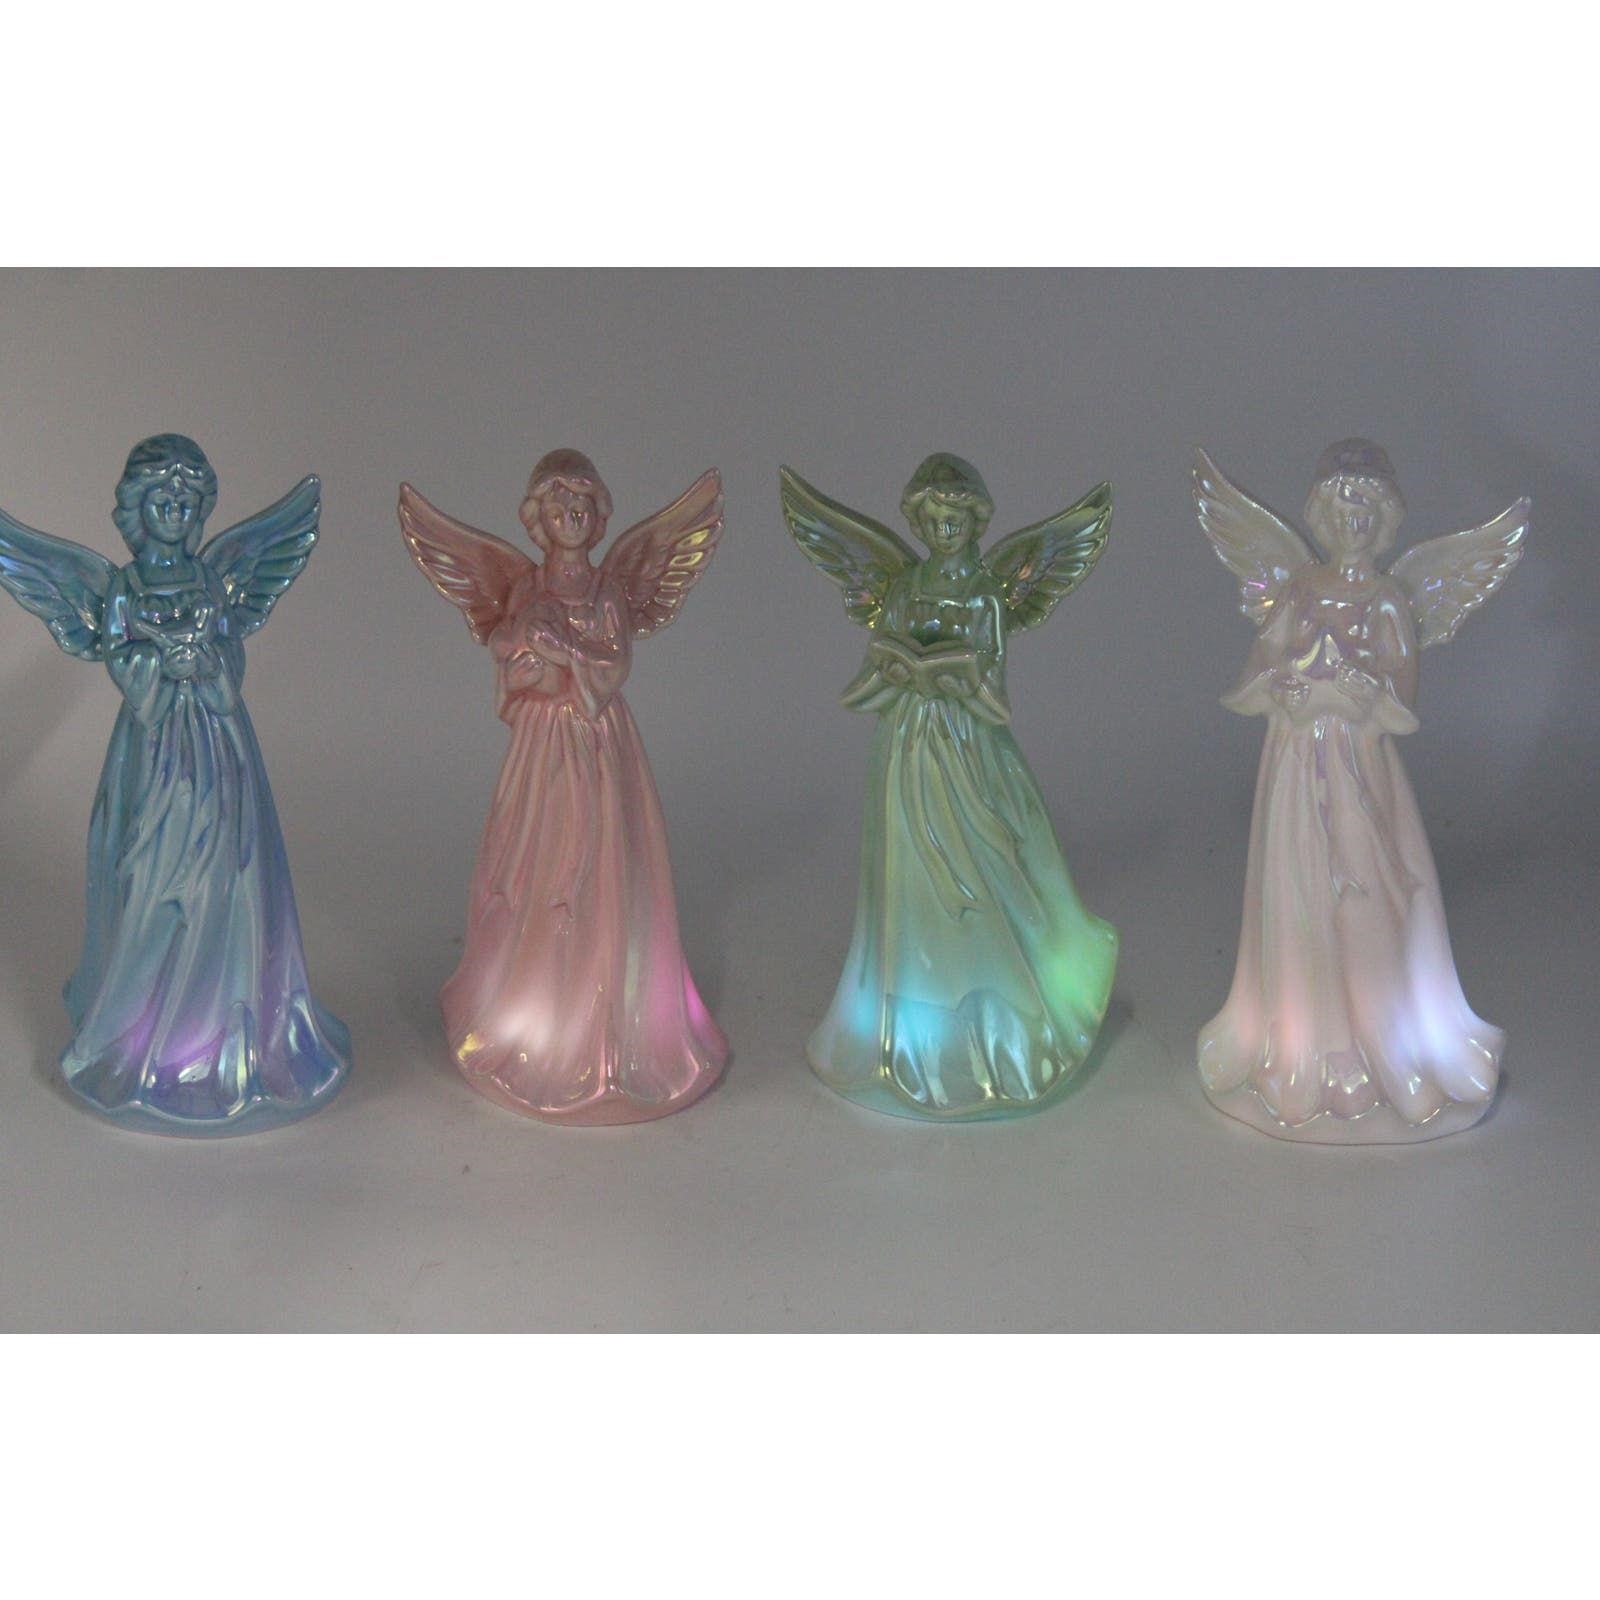 S/4 Iridescent Porcelain Angels